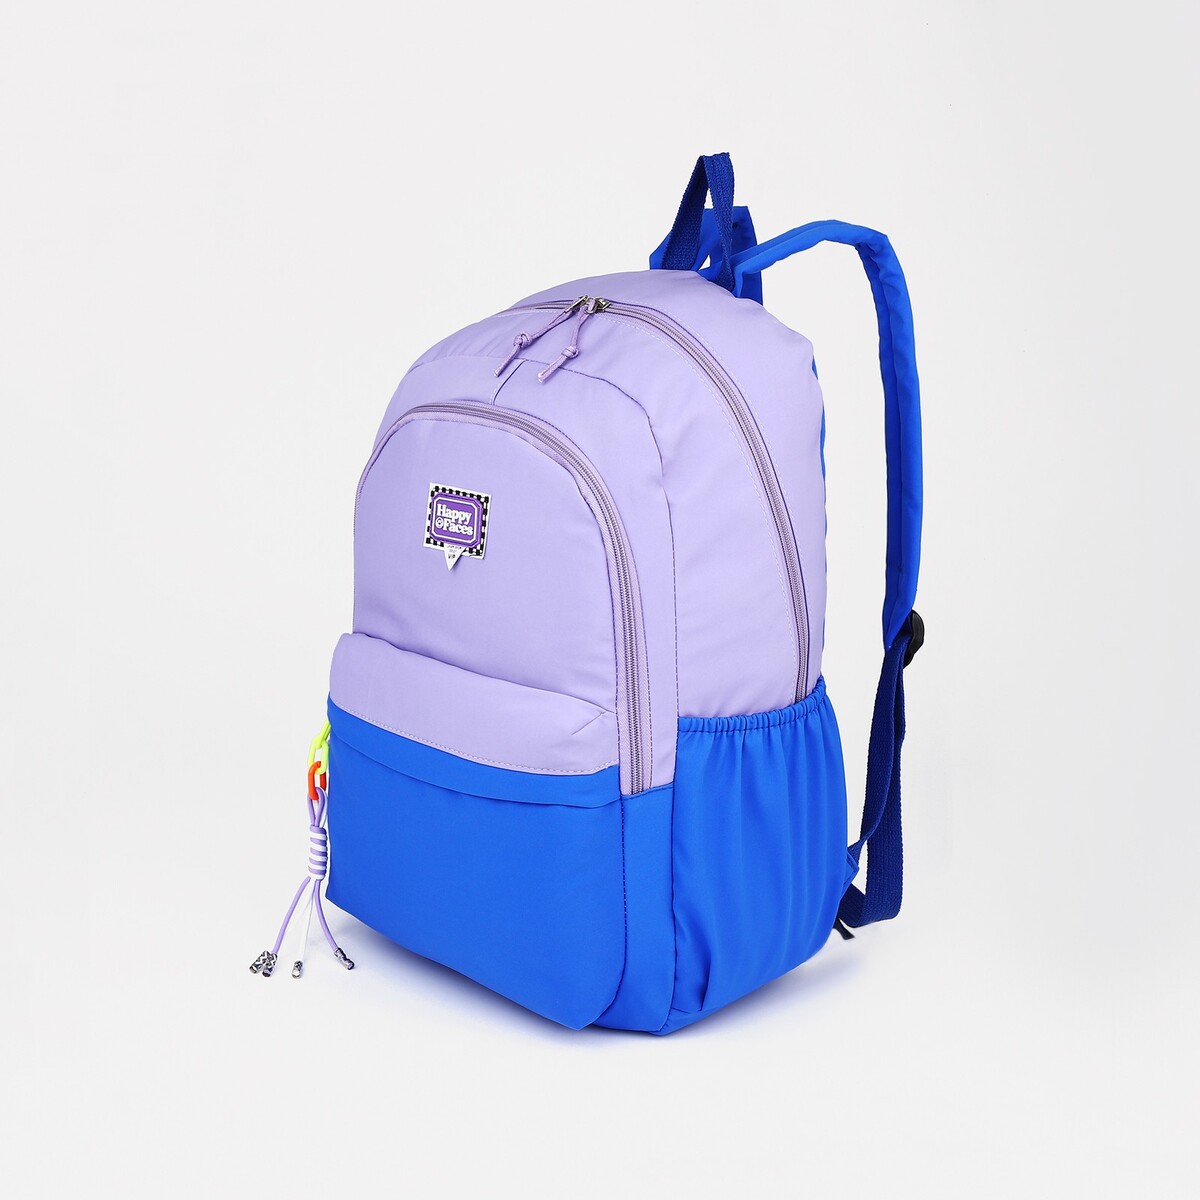 Рюкзак на молнии, 4 наружных кармана, цвет сиреневый/синий рюкзак сумка из текстиля на молнии 3 кармана отдел для ноутбука синий